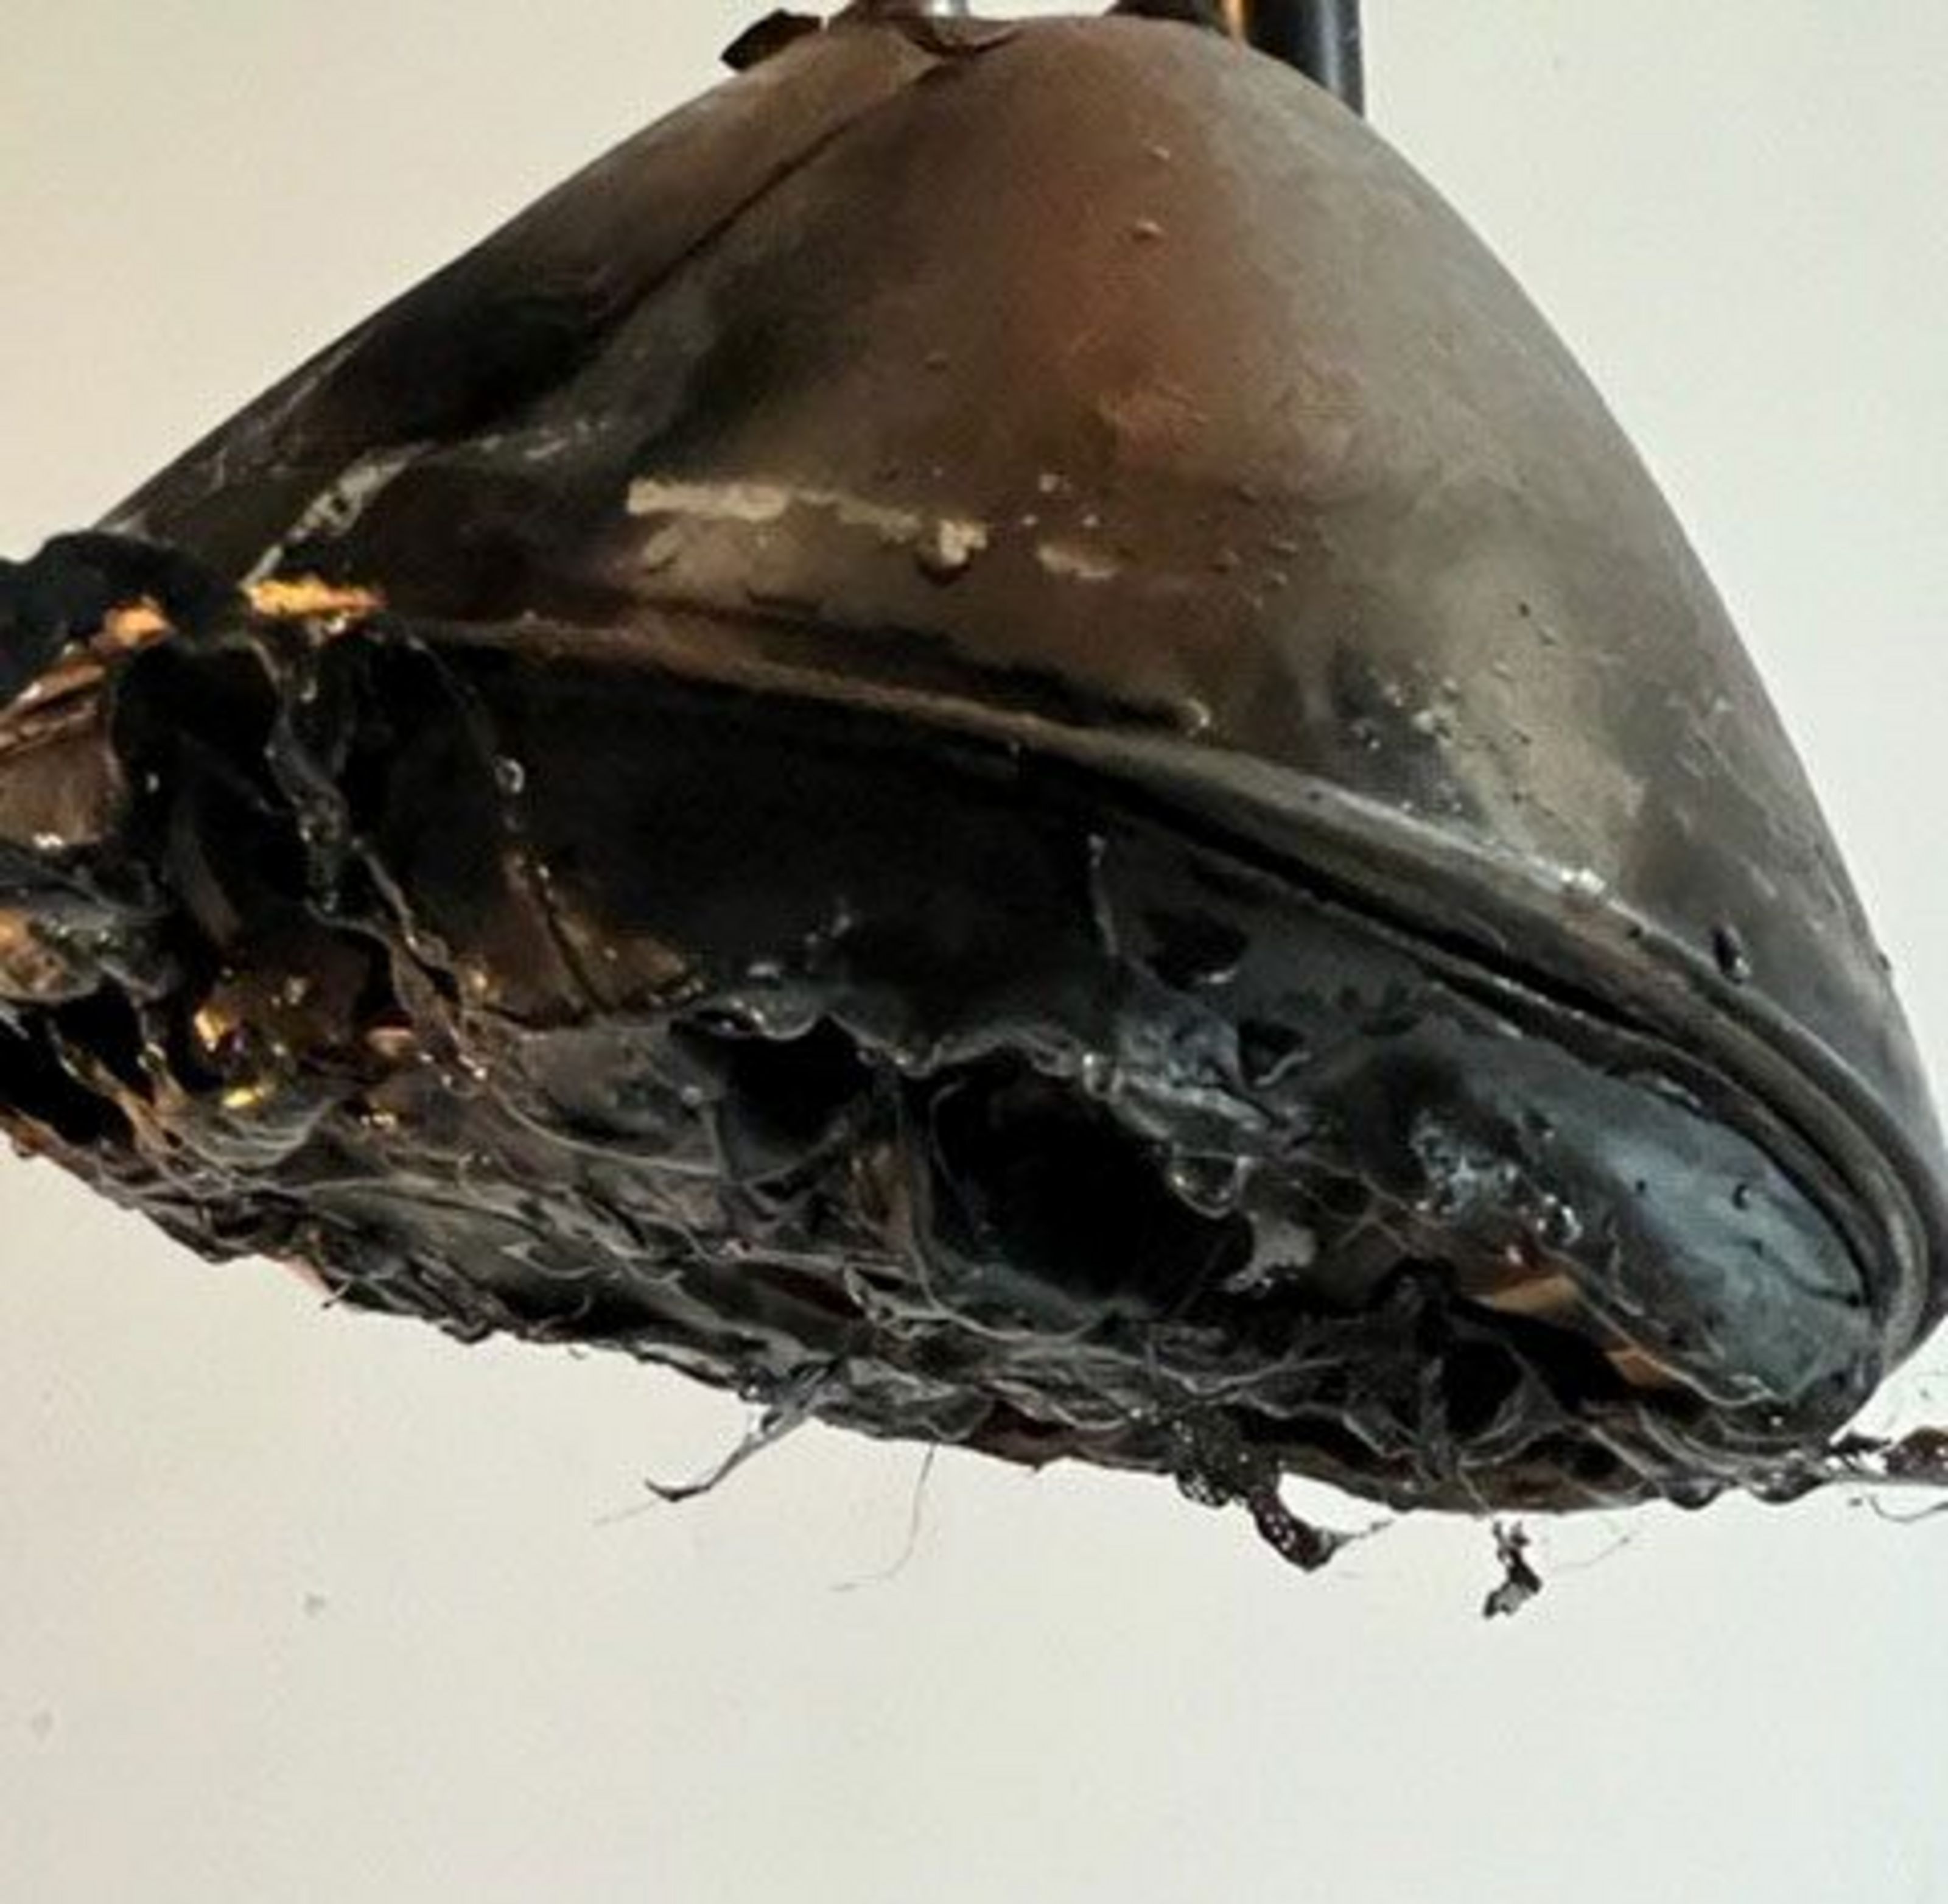 A burned, black tea kettle.